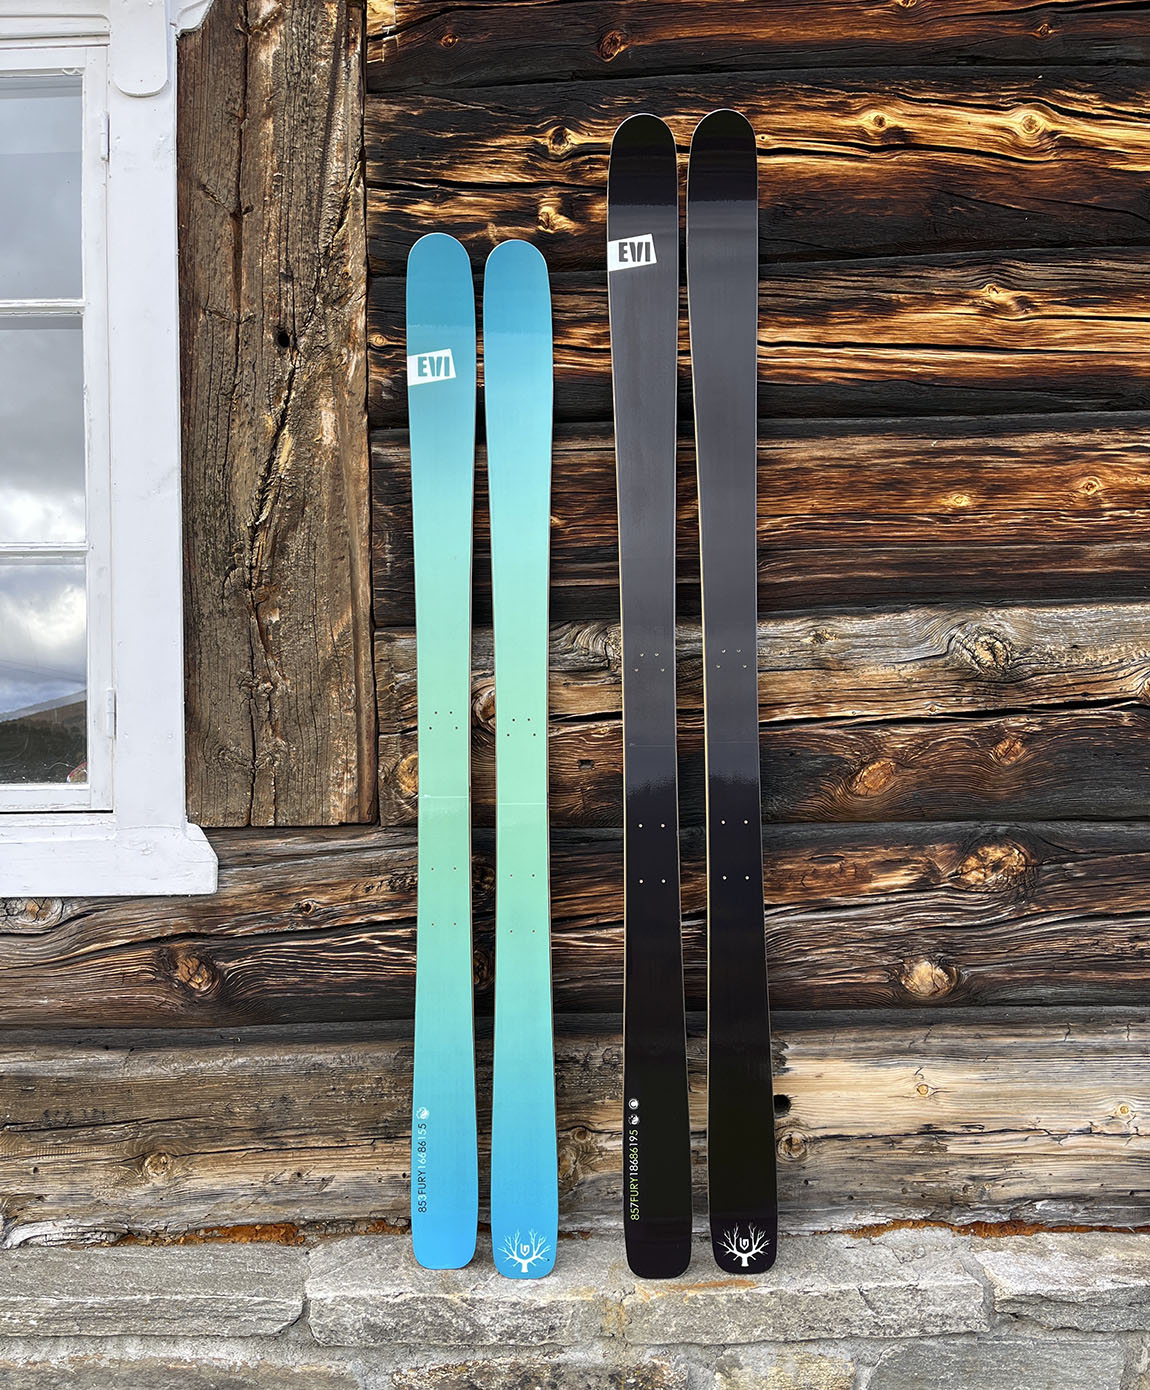 EVI Ski: Slide into the future on long-lasting upgradeable skis